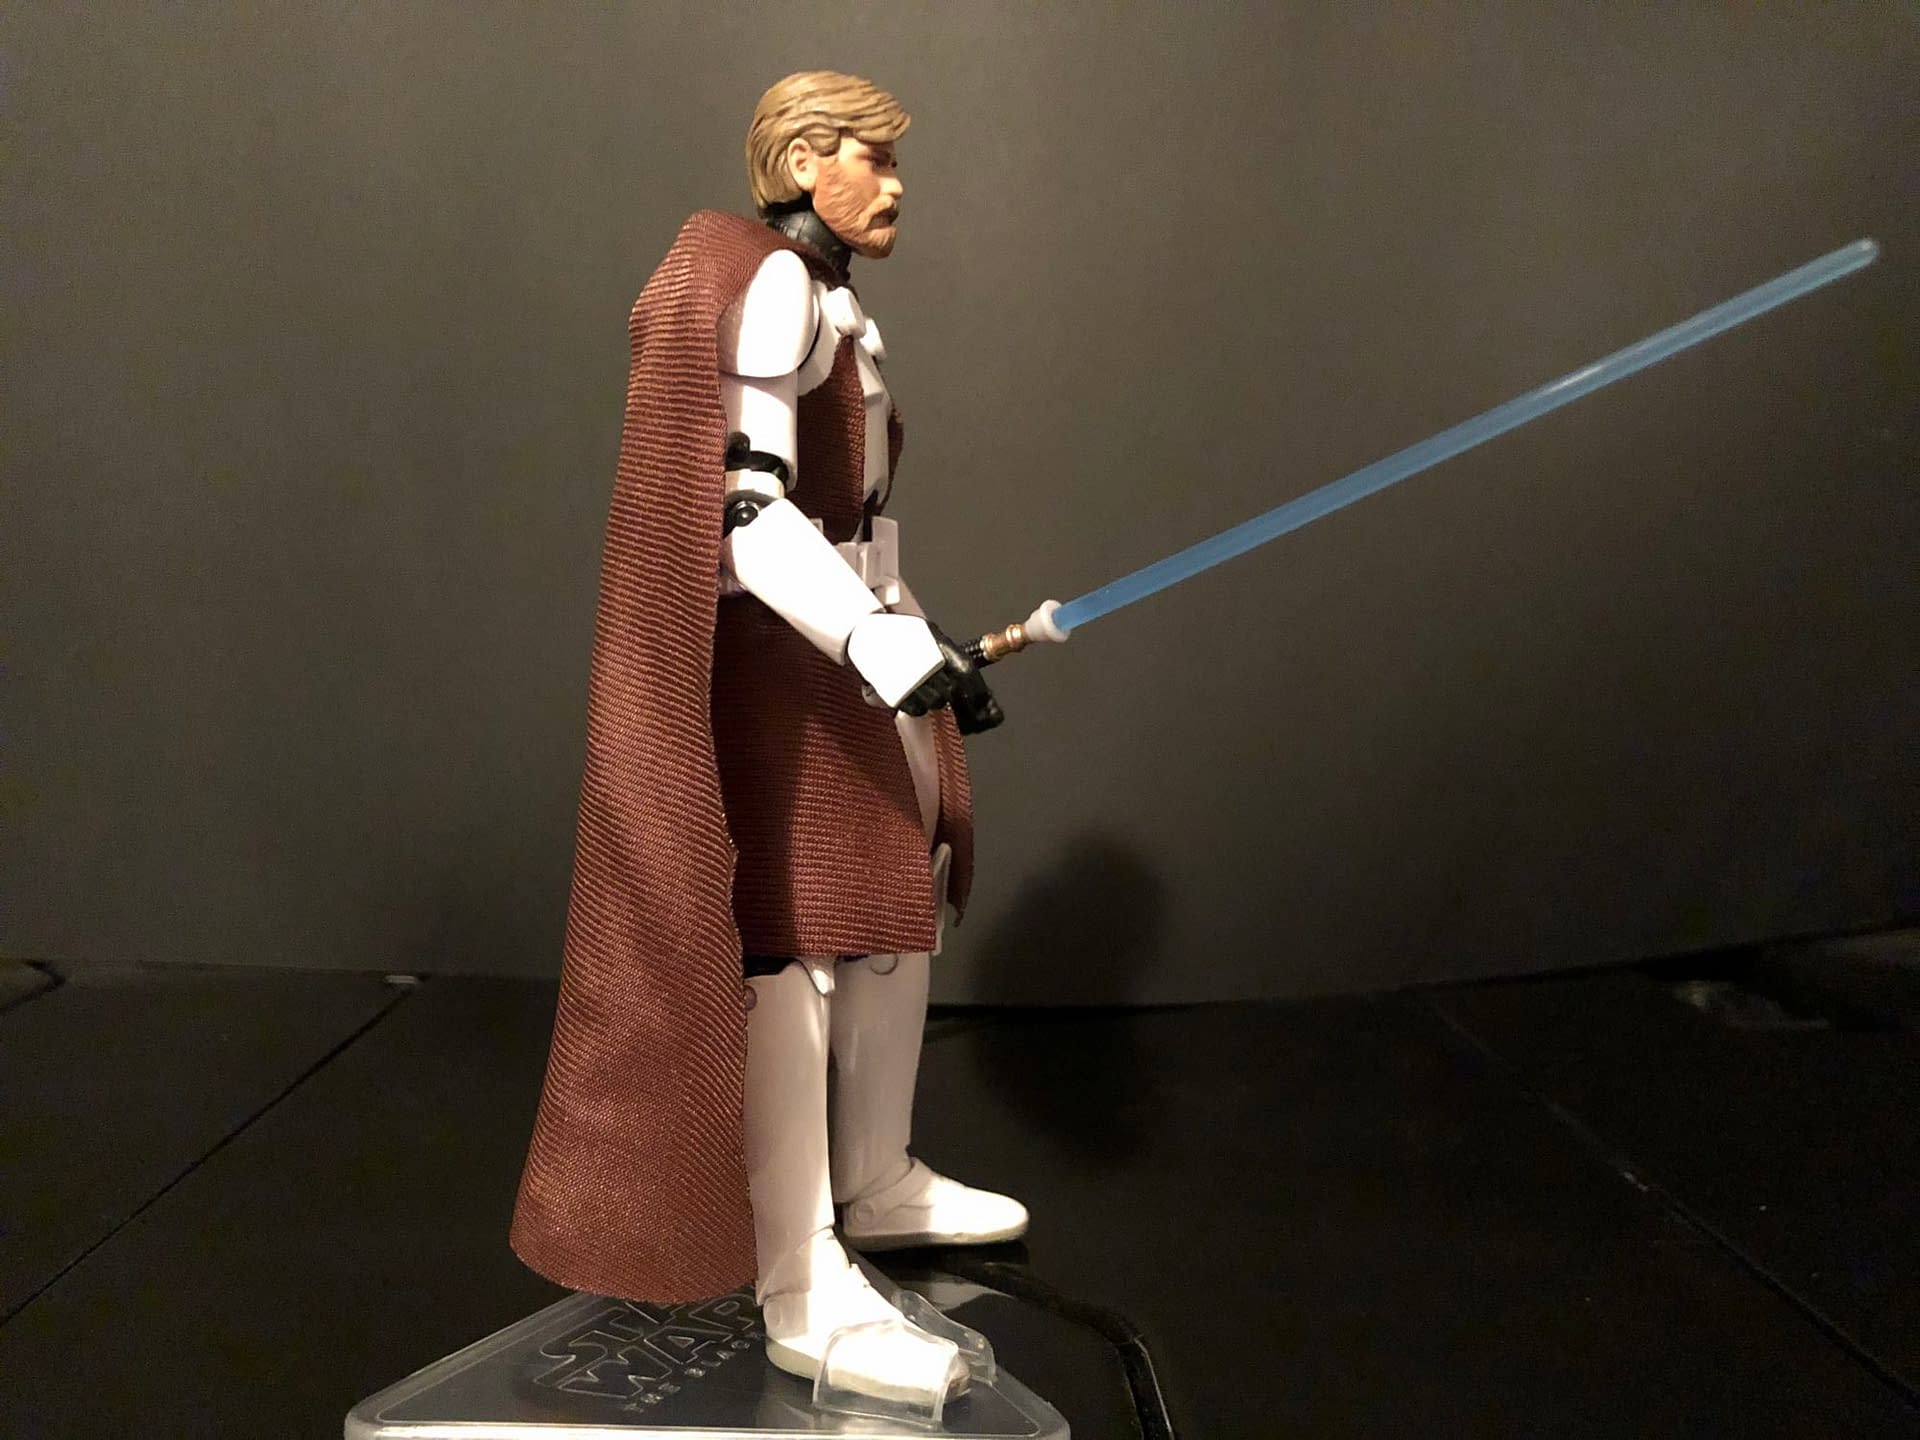 General Obi-Wan Kenobi Joins the Battlefield [Review]